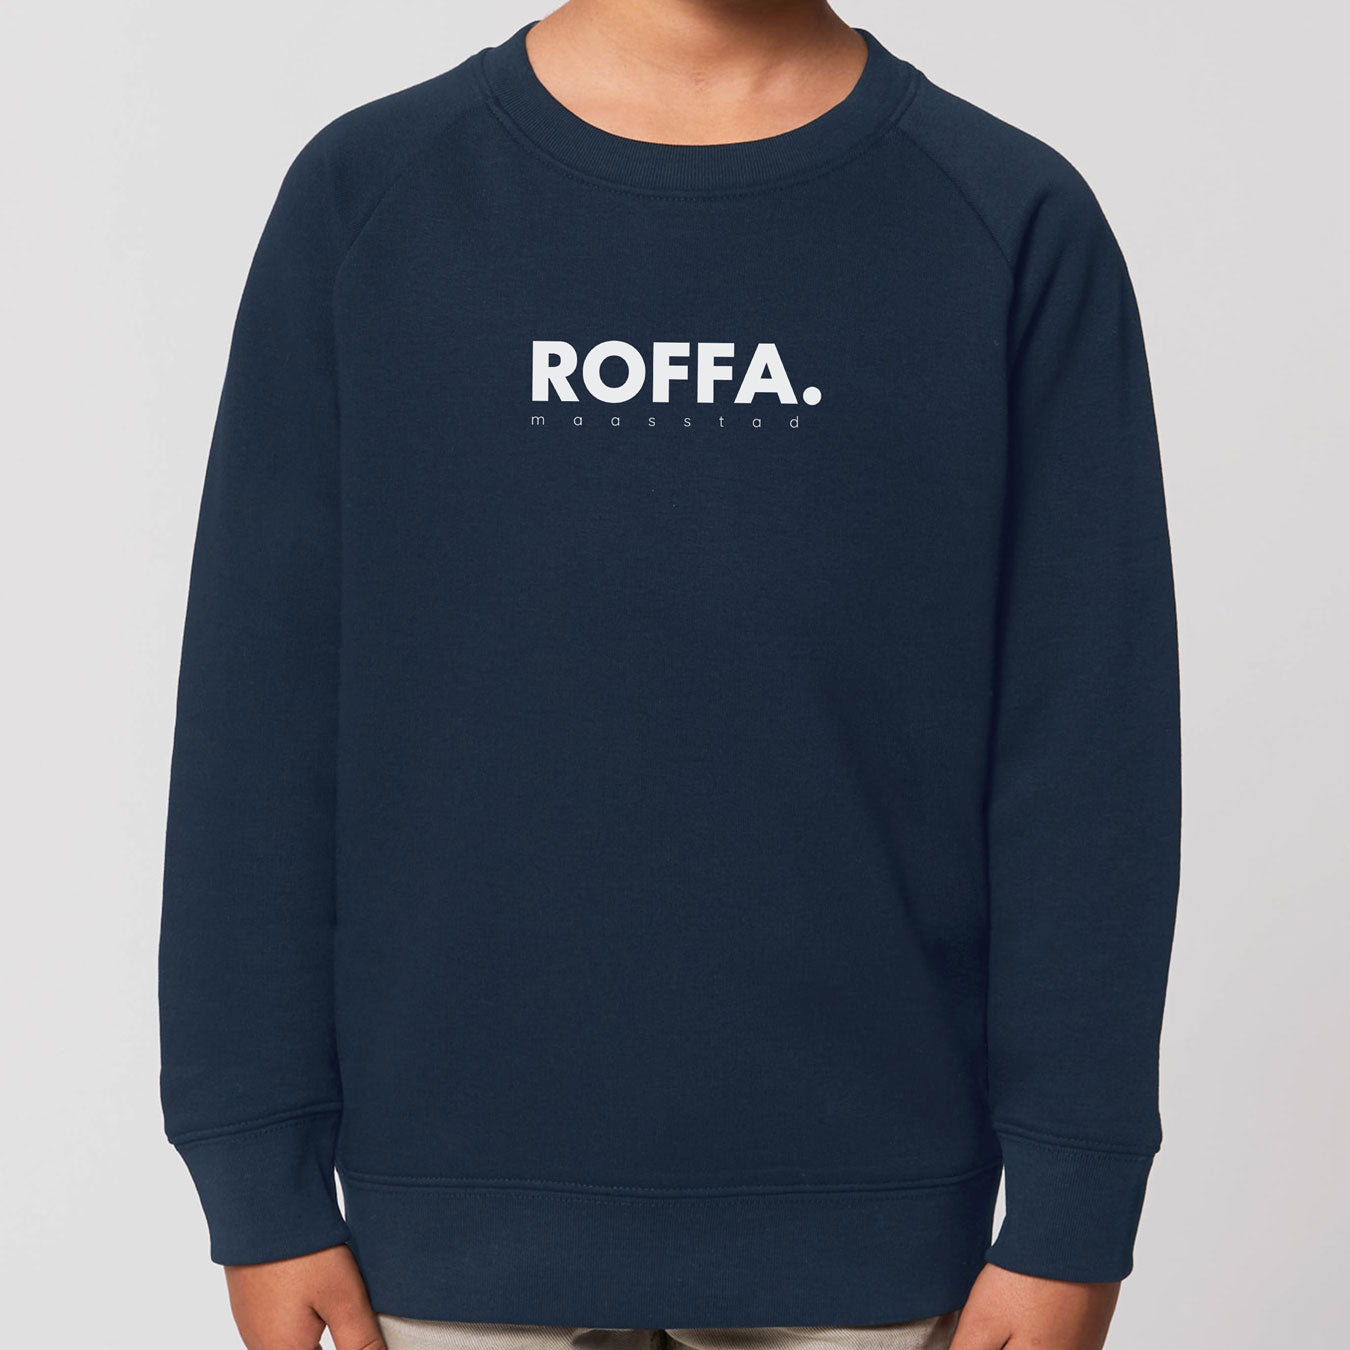 Blauwe kinder trui met Roffa en rotterdam logo